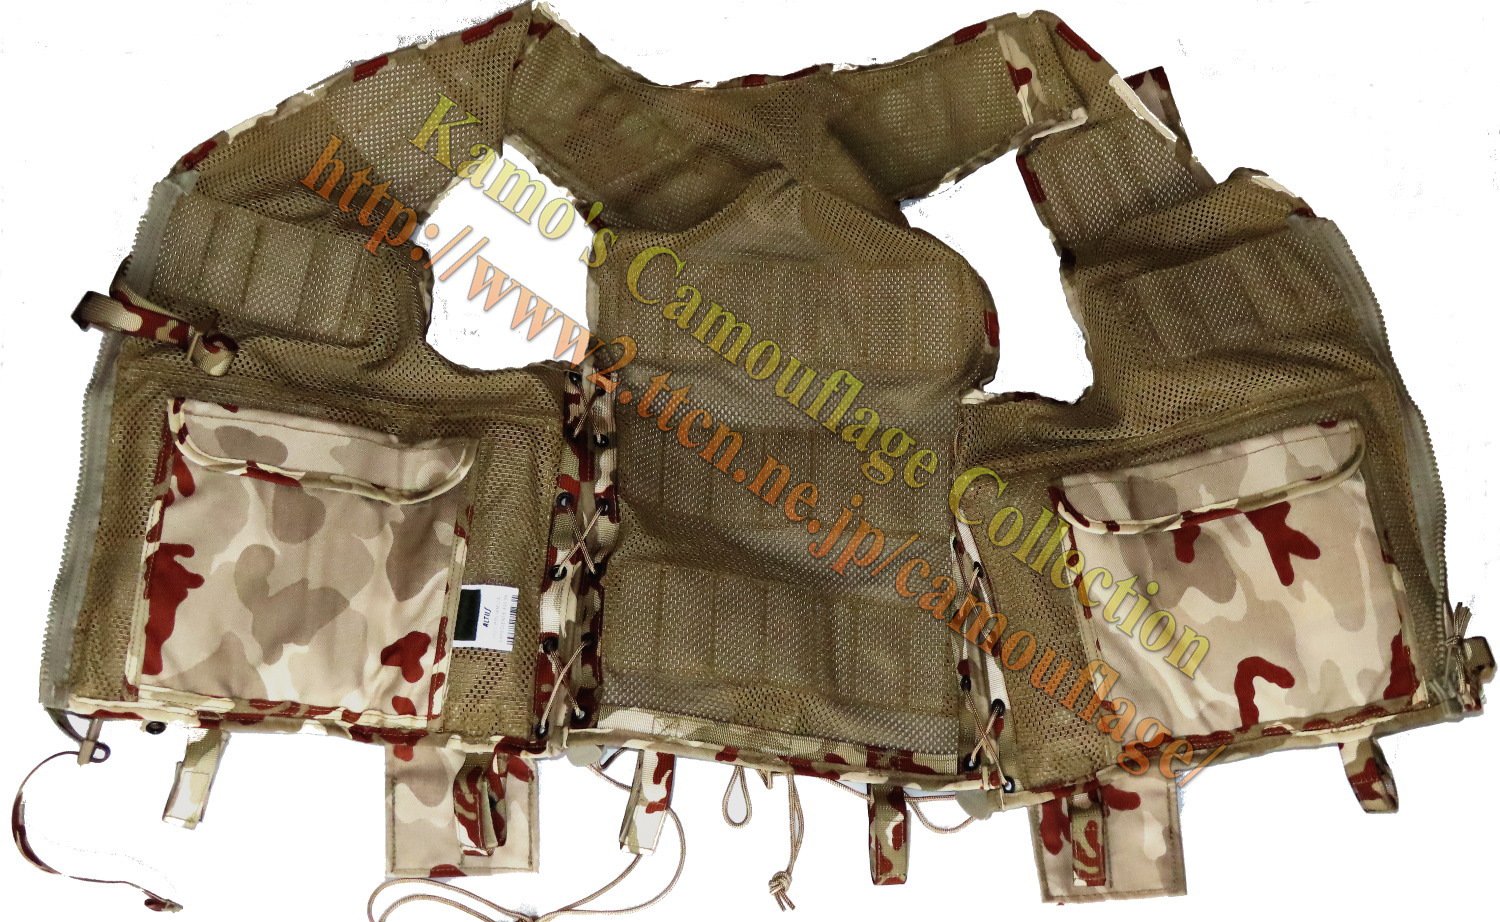 Spanish Marine Desert Camouflage Tactical Vest (Inside)